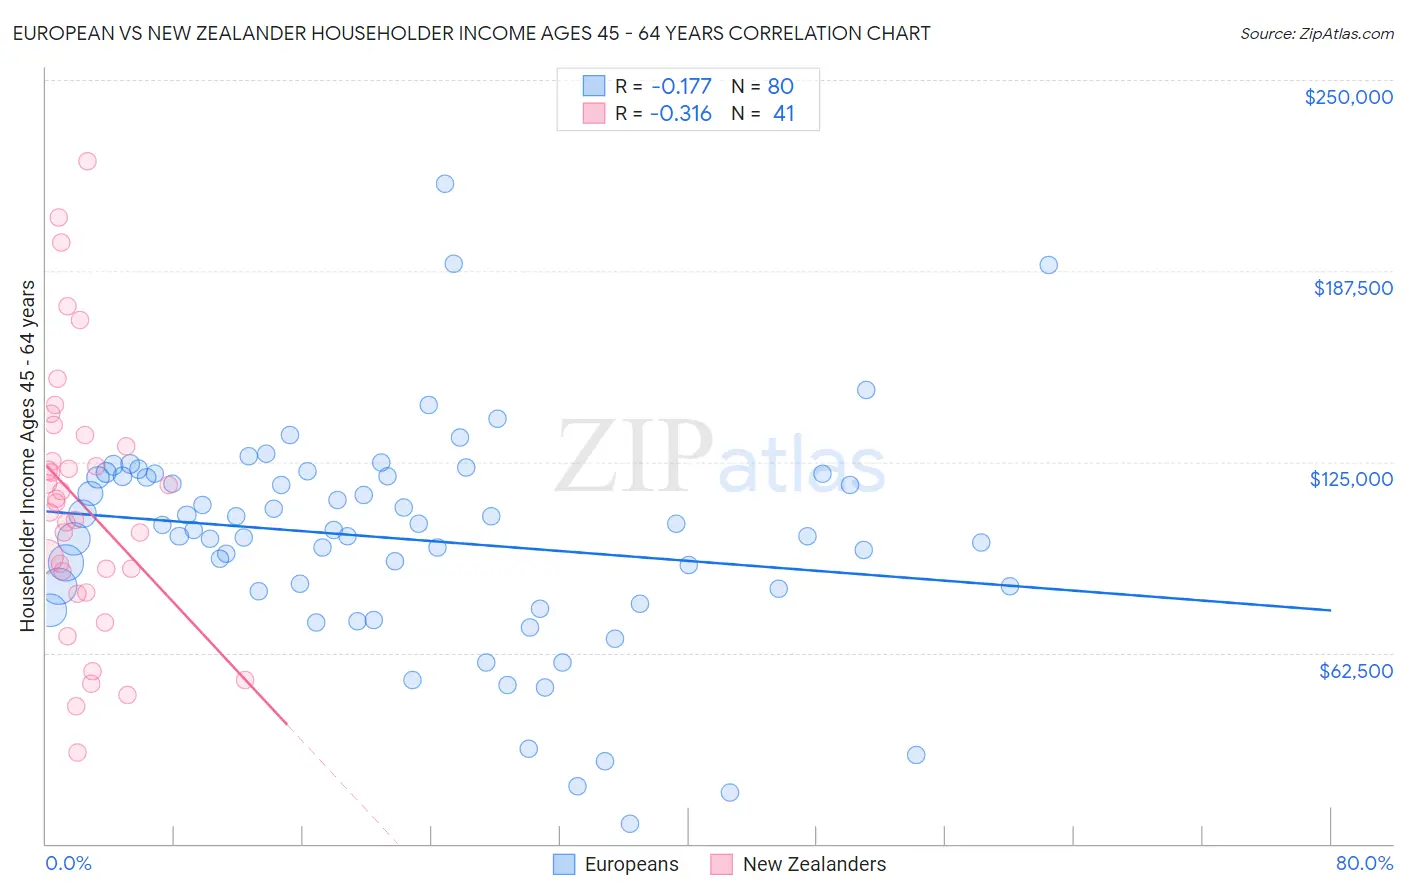 European vs New Zealander Householder Income Ages 45 - 64 years